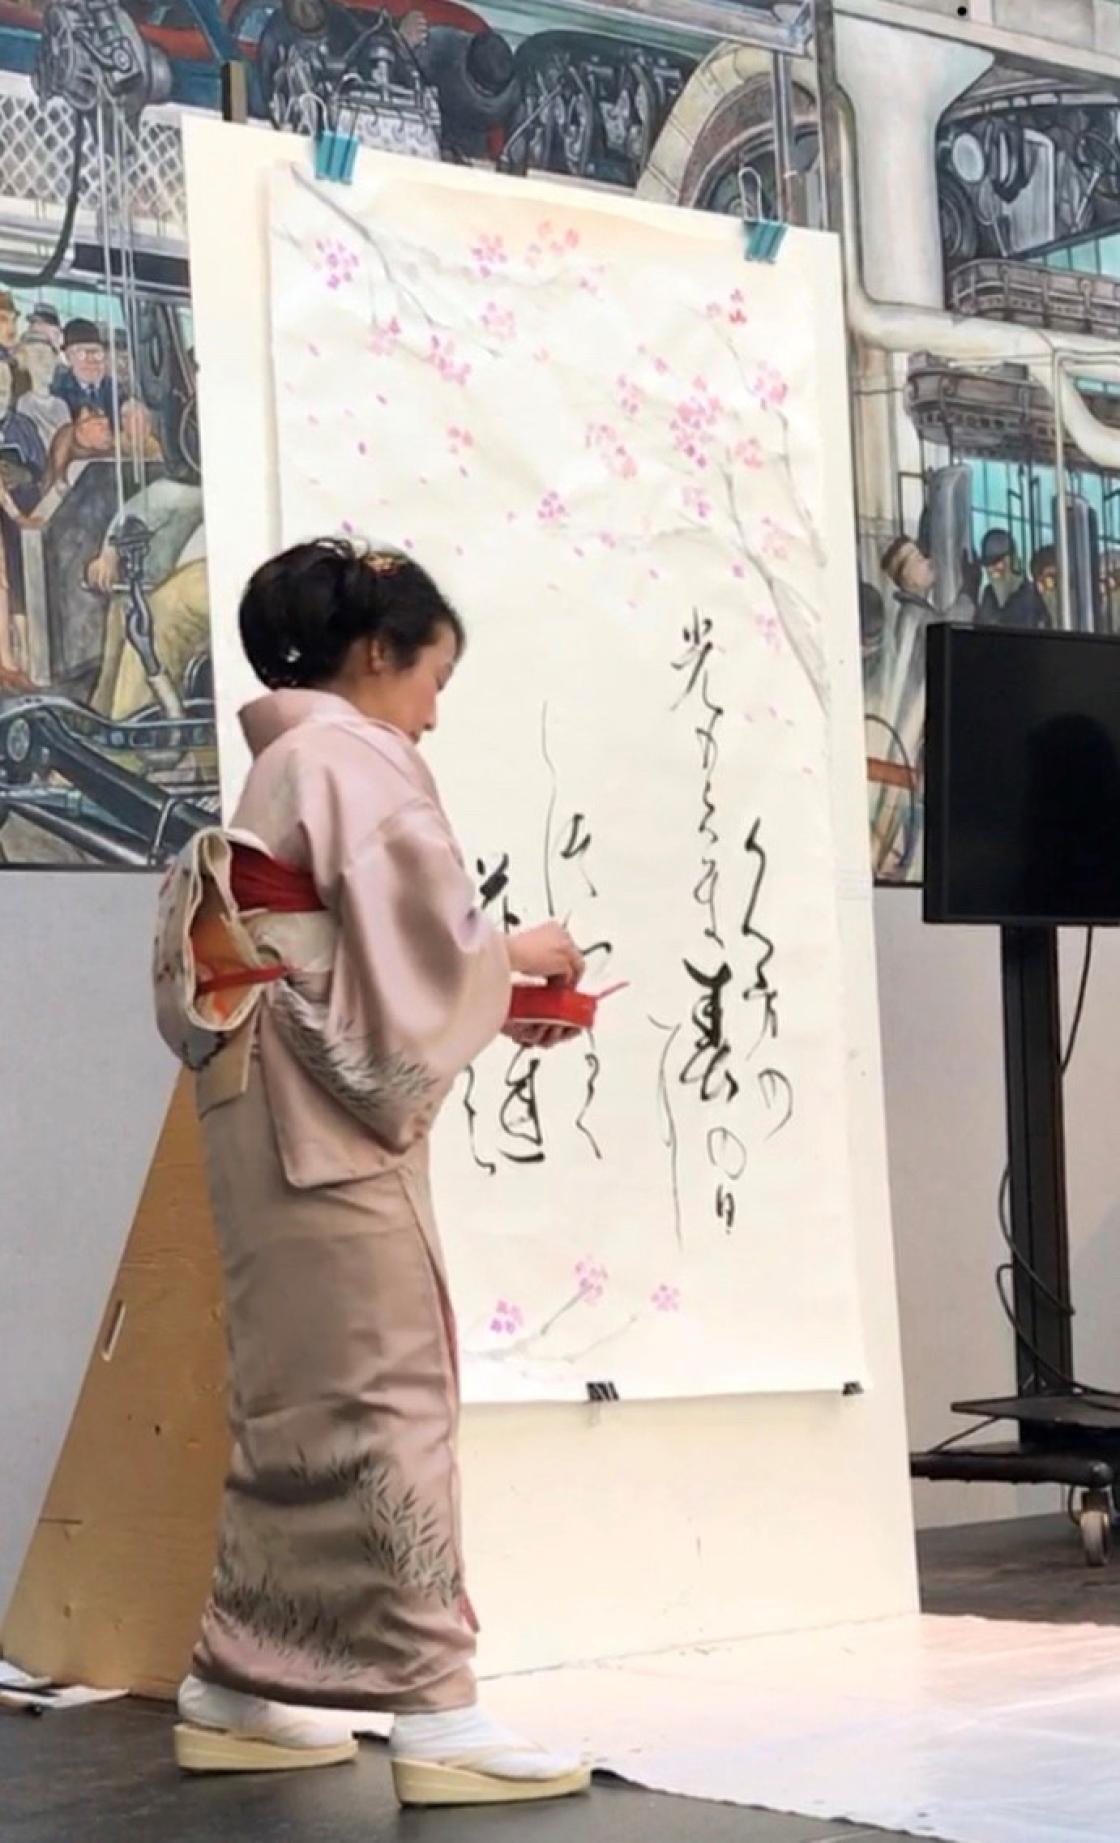 Kyoko Fujii demonstrating traditional Japanese calligraphy